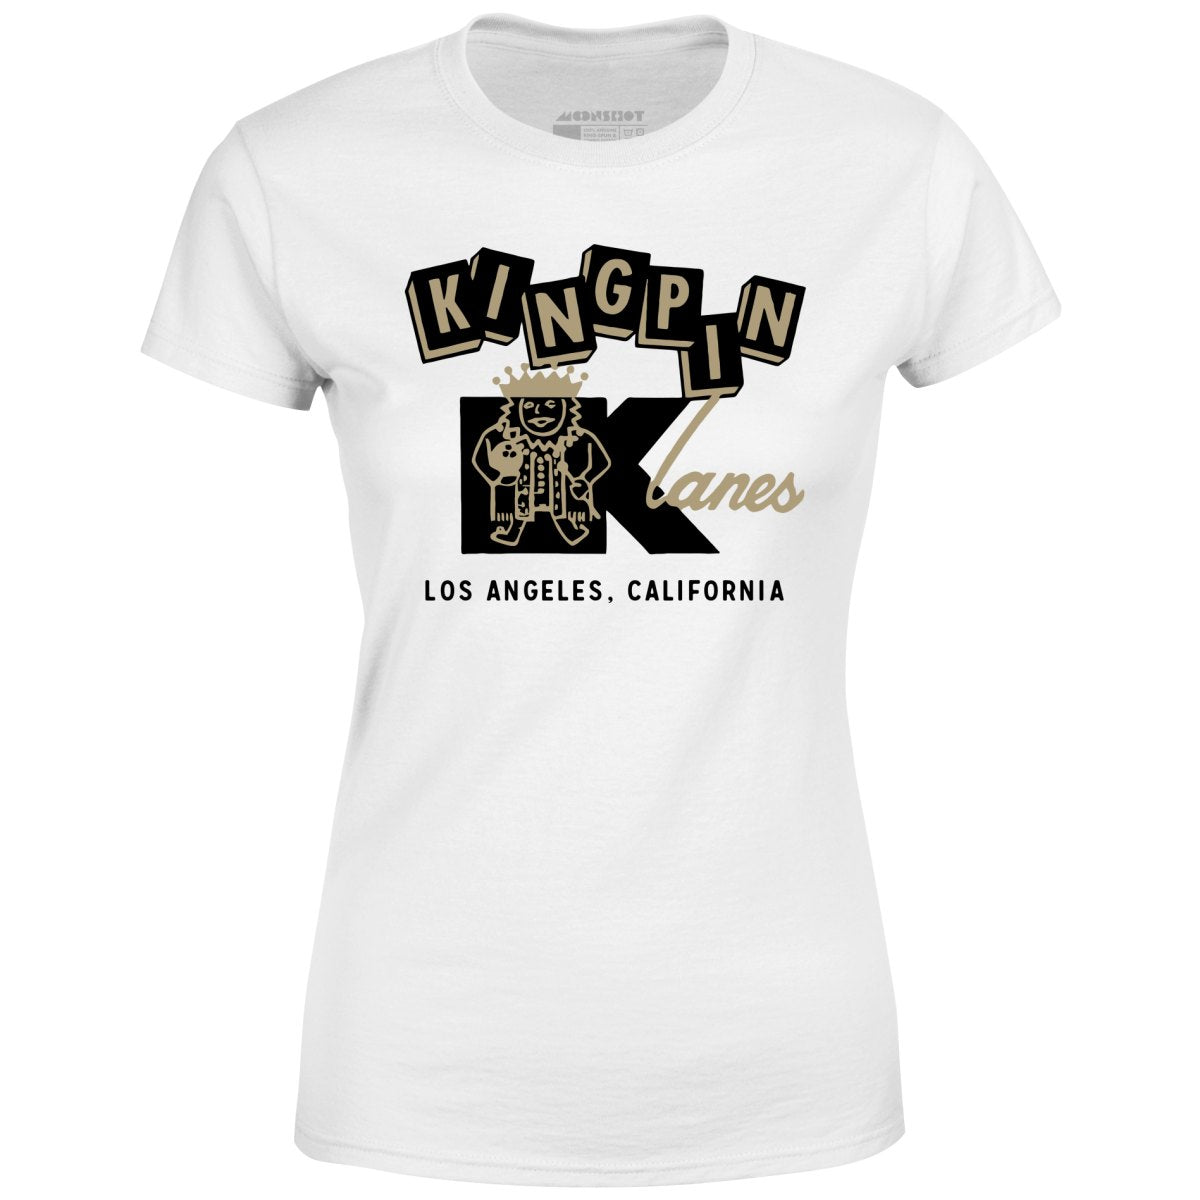 Kingpin Lanes - Los Angeles, CA - Vintage Bowling Alley - Women's T-Shirt